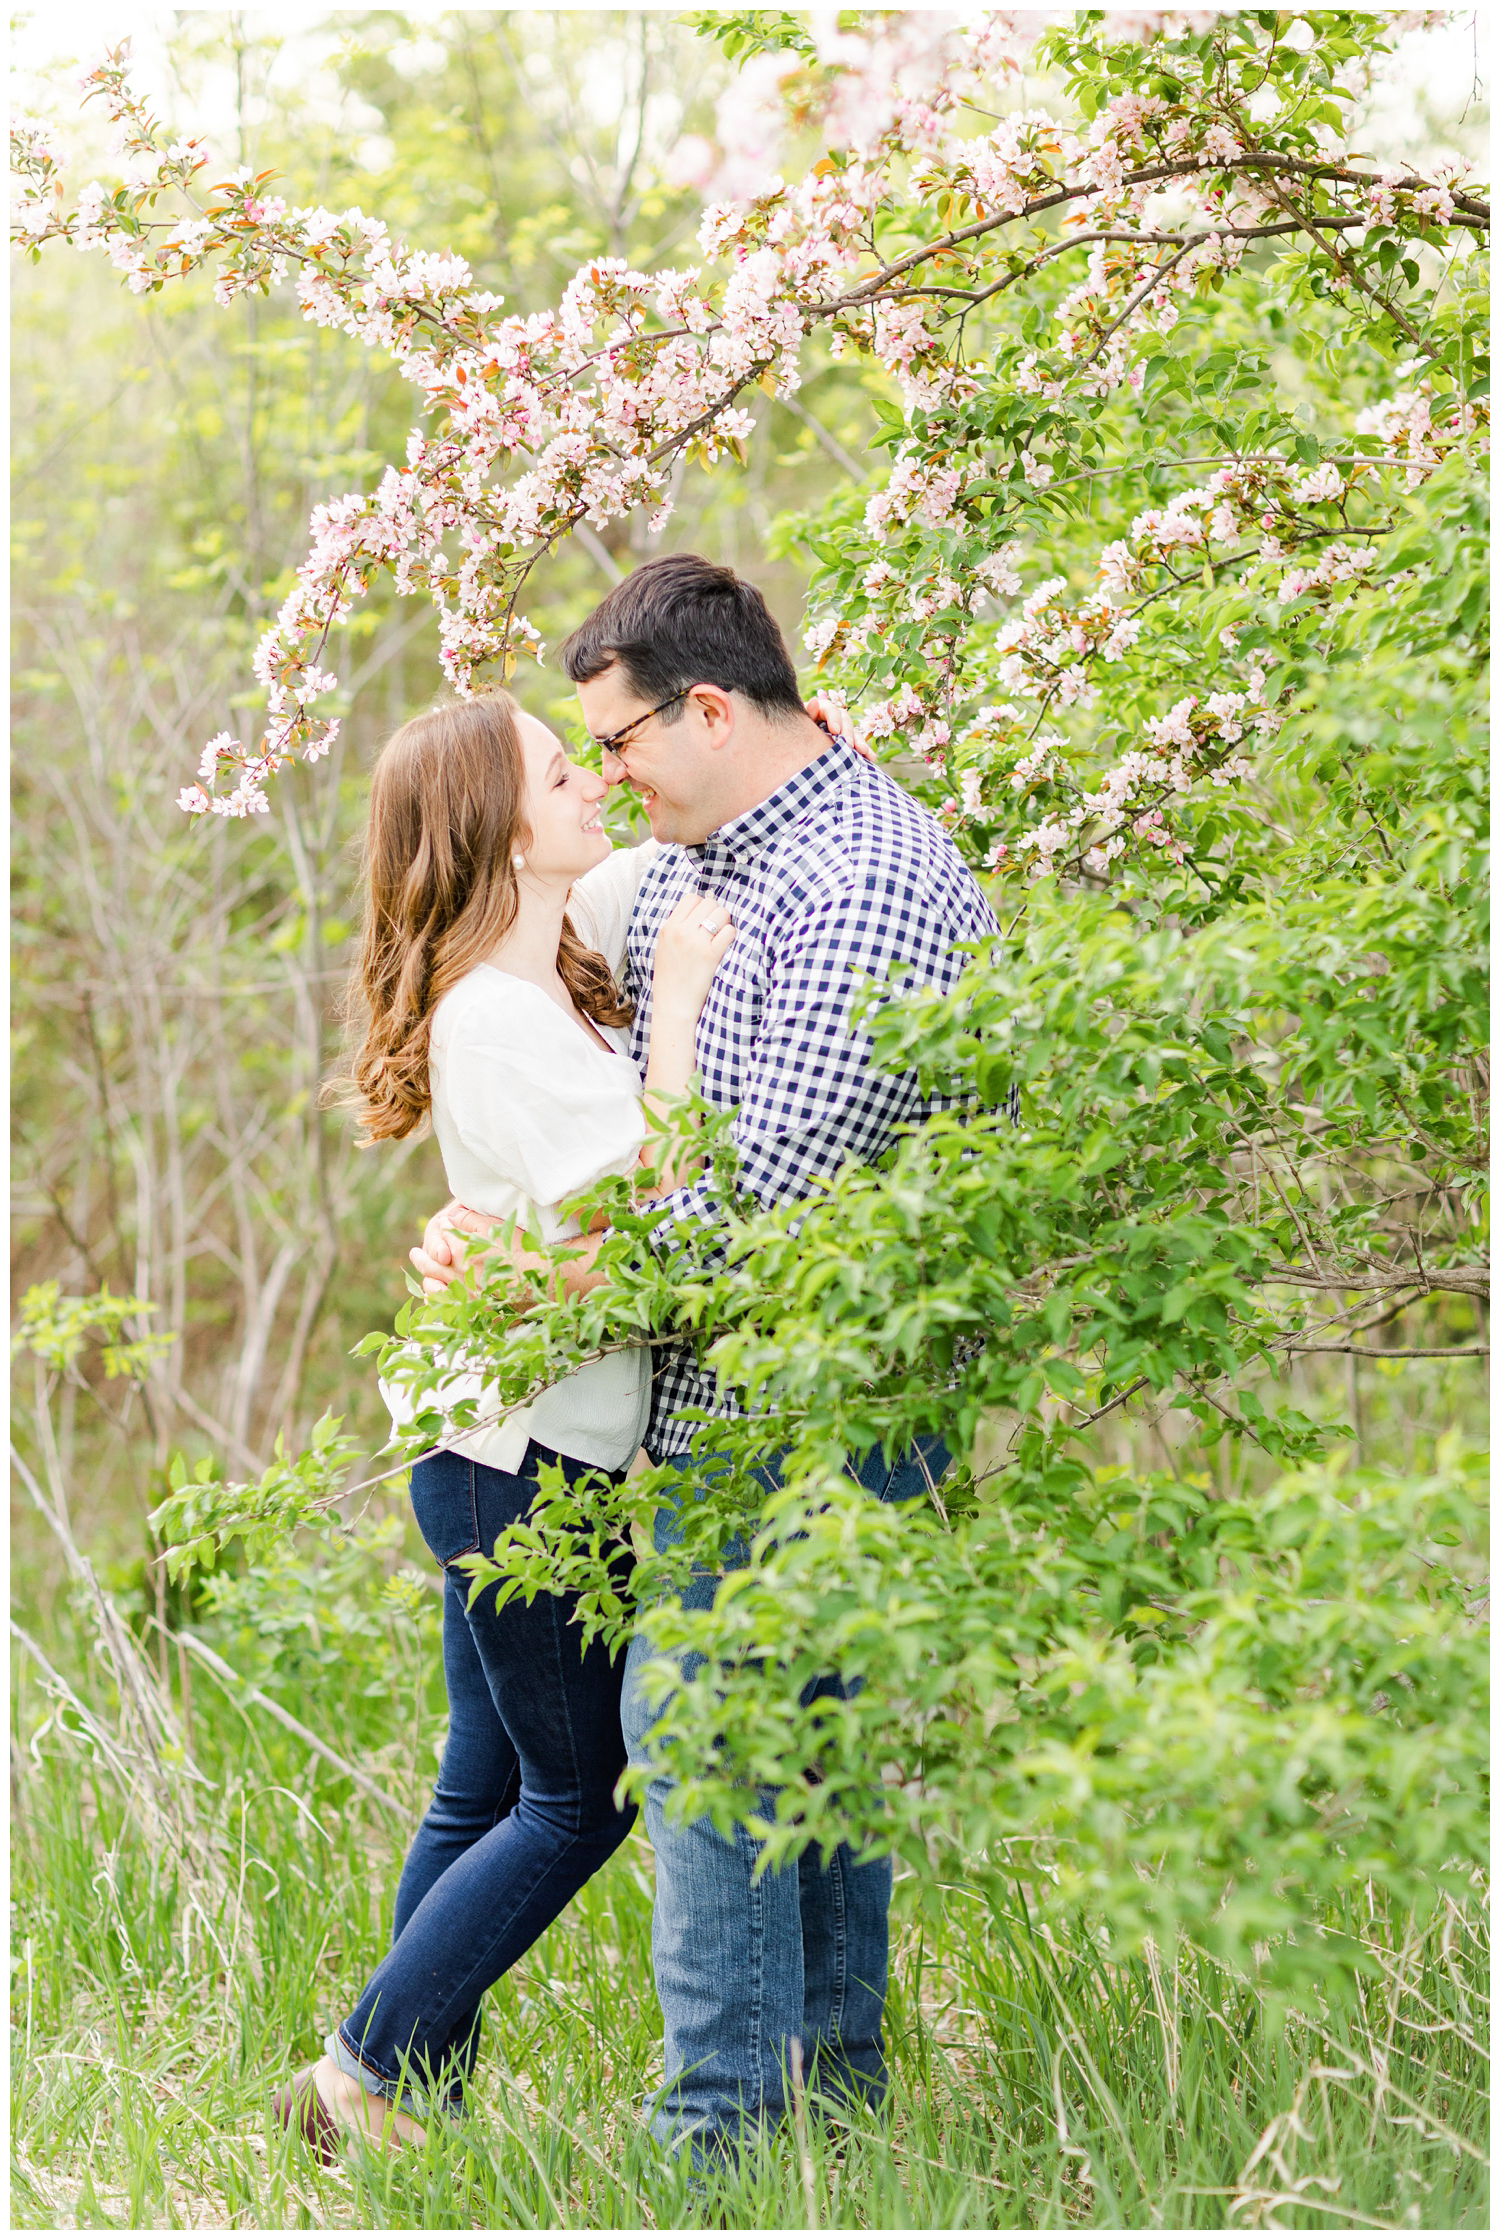 Joe and Leslie embrace underneath a spring blossom tree | CB Studio